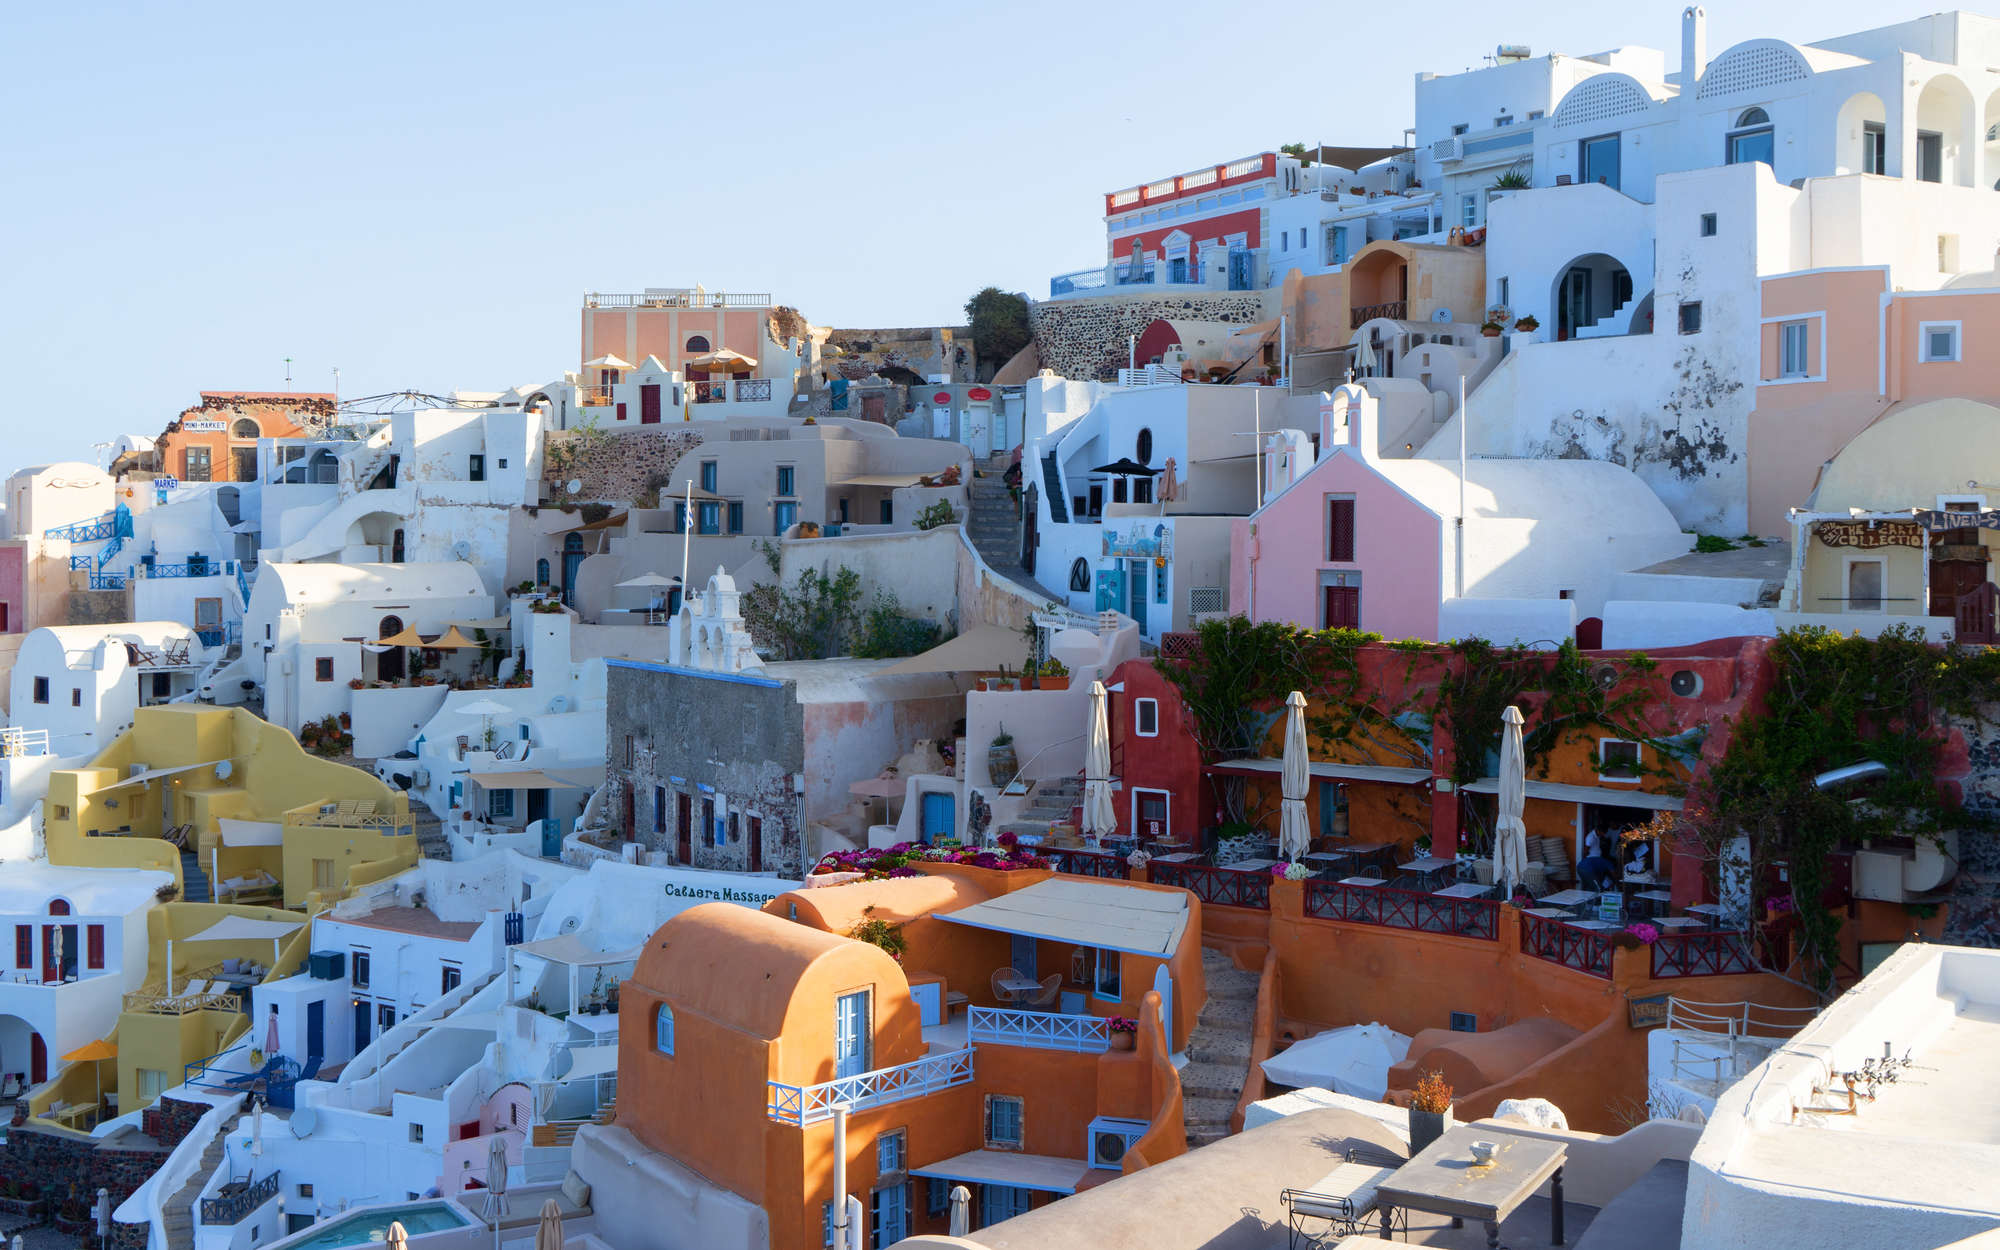             Fototapete Häuser von Santorini – Premium Glattvlies
        